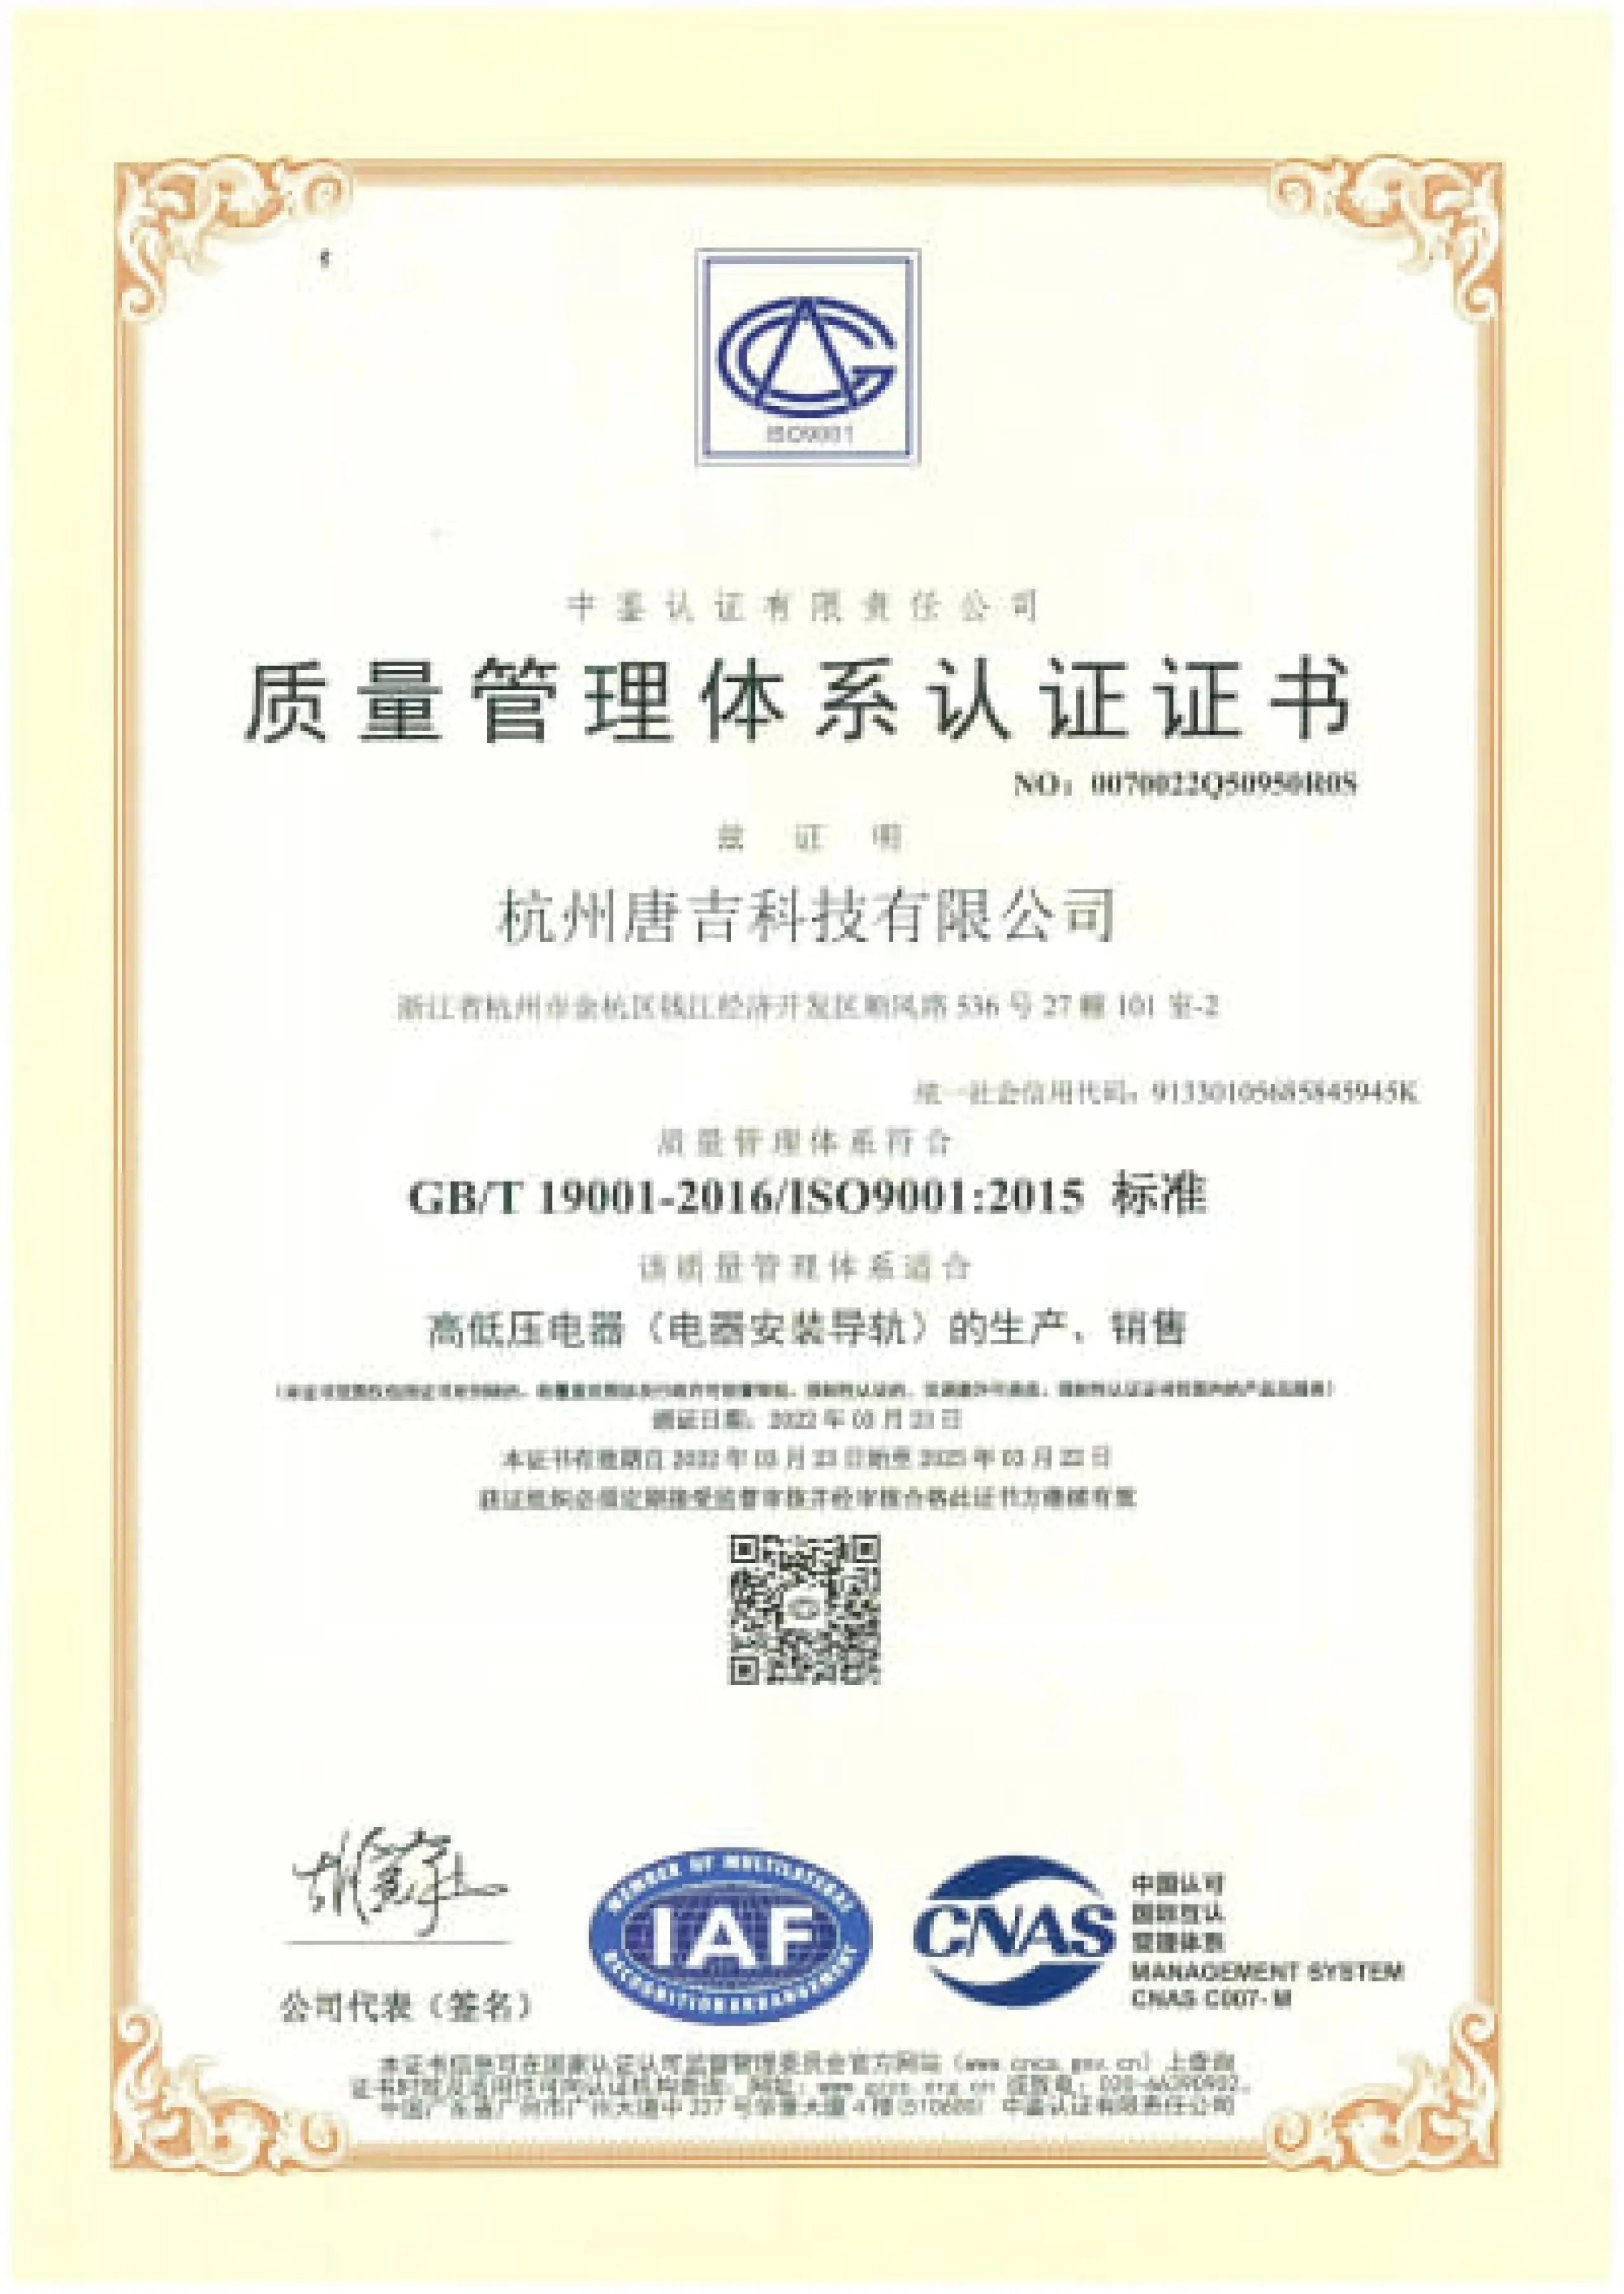 Cn Iso 9002 Certificate